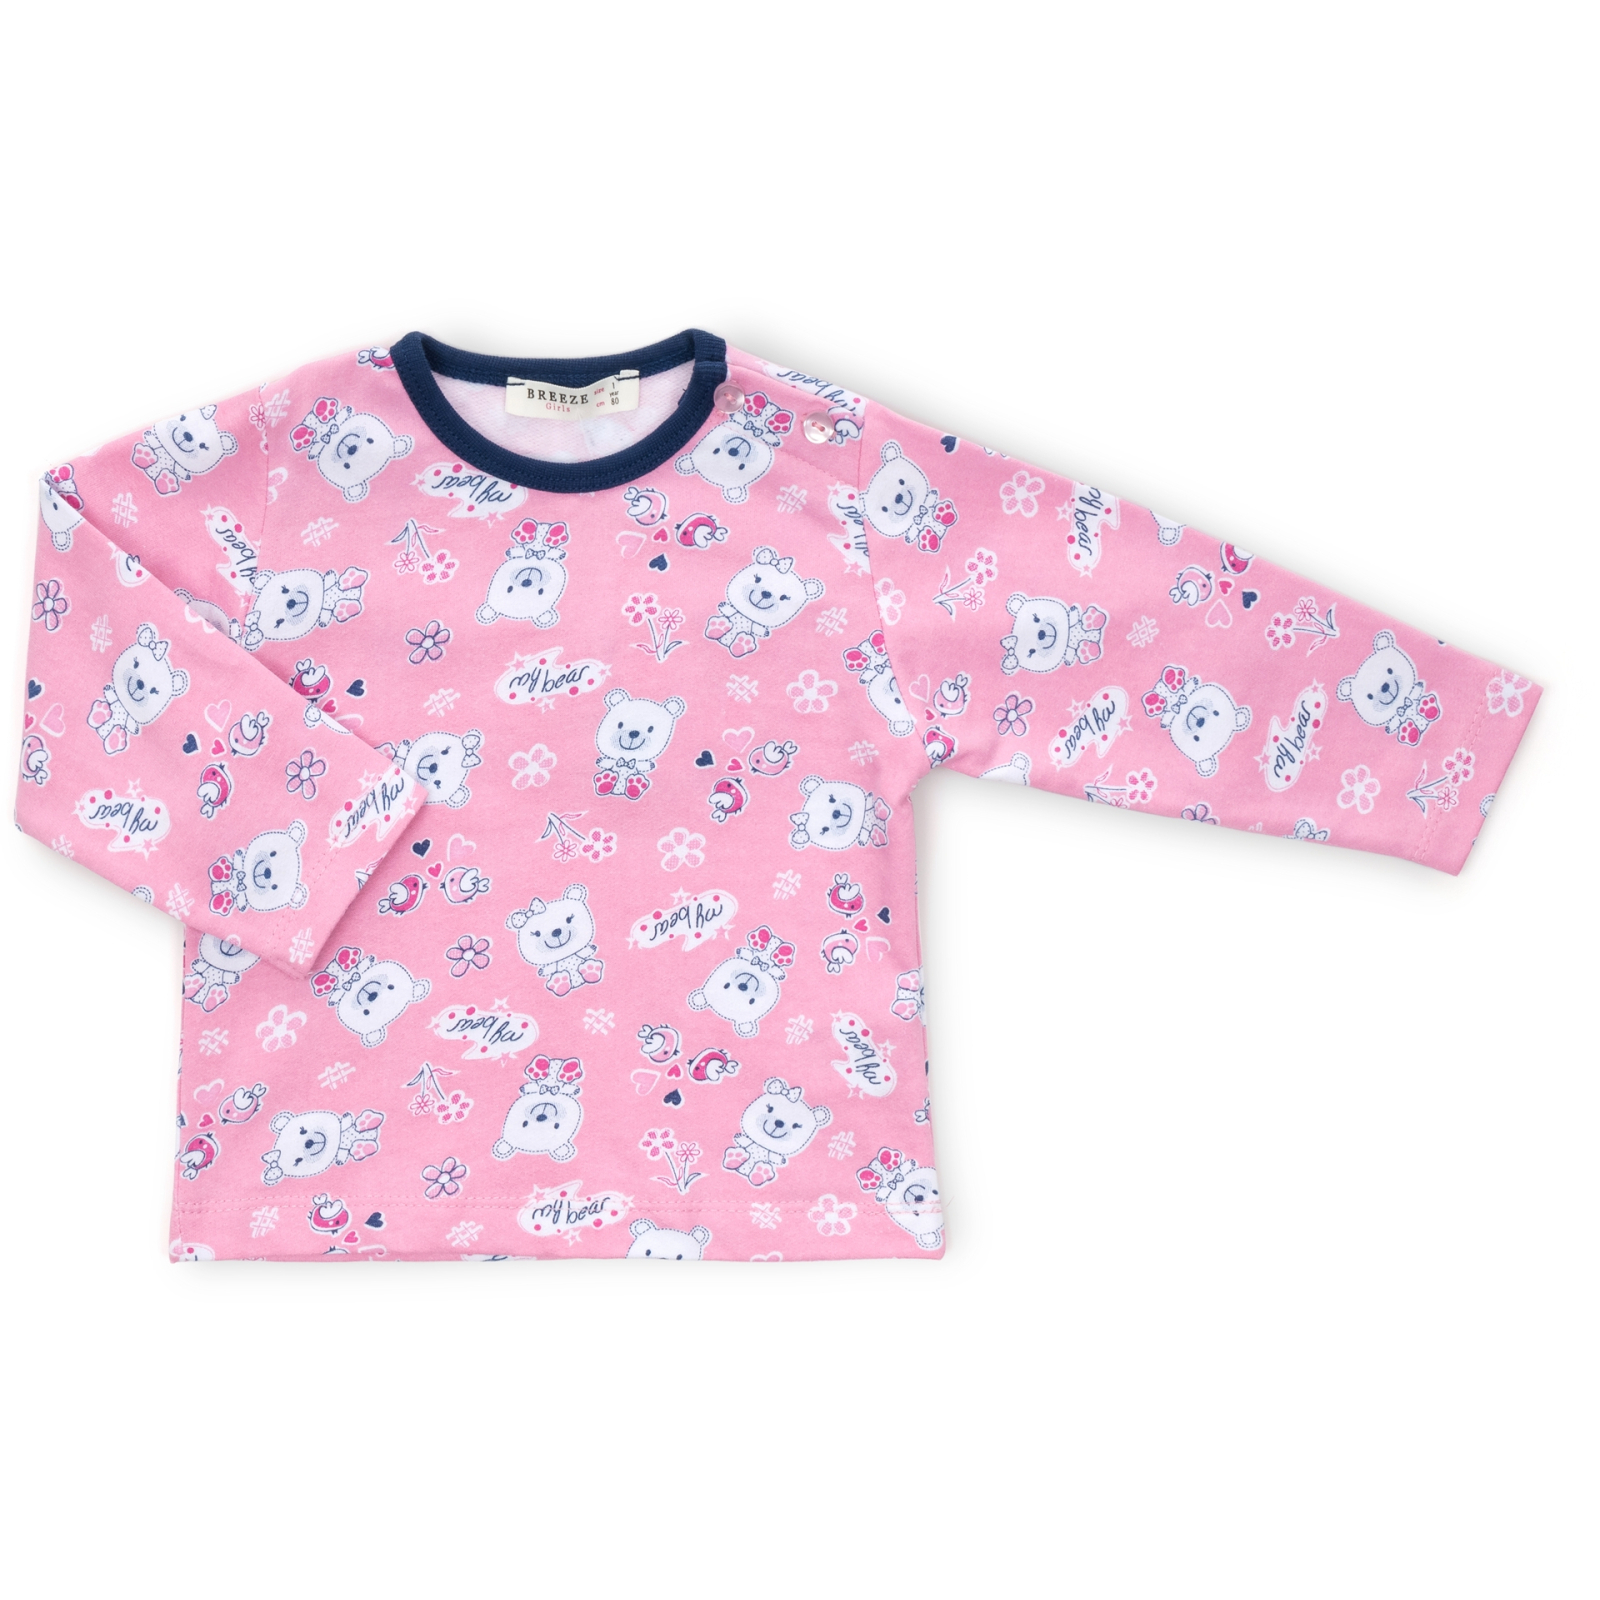 Пижама Breeze с мишками (8382-104G-pink) изображение 2